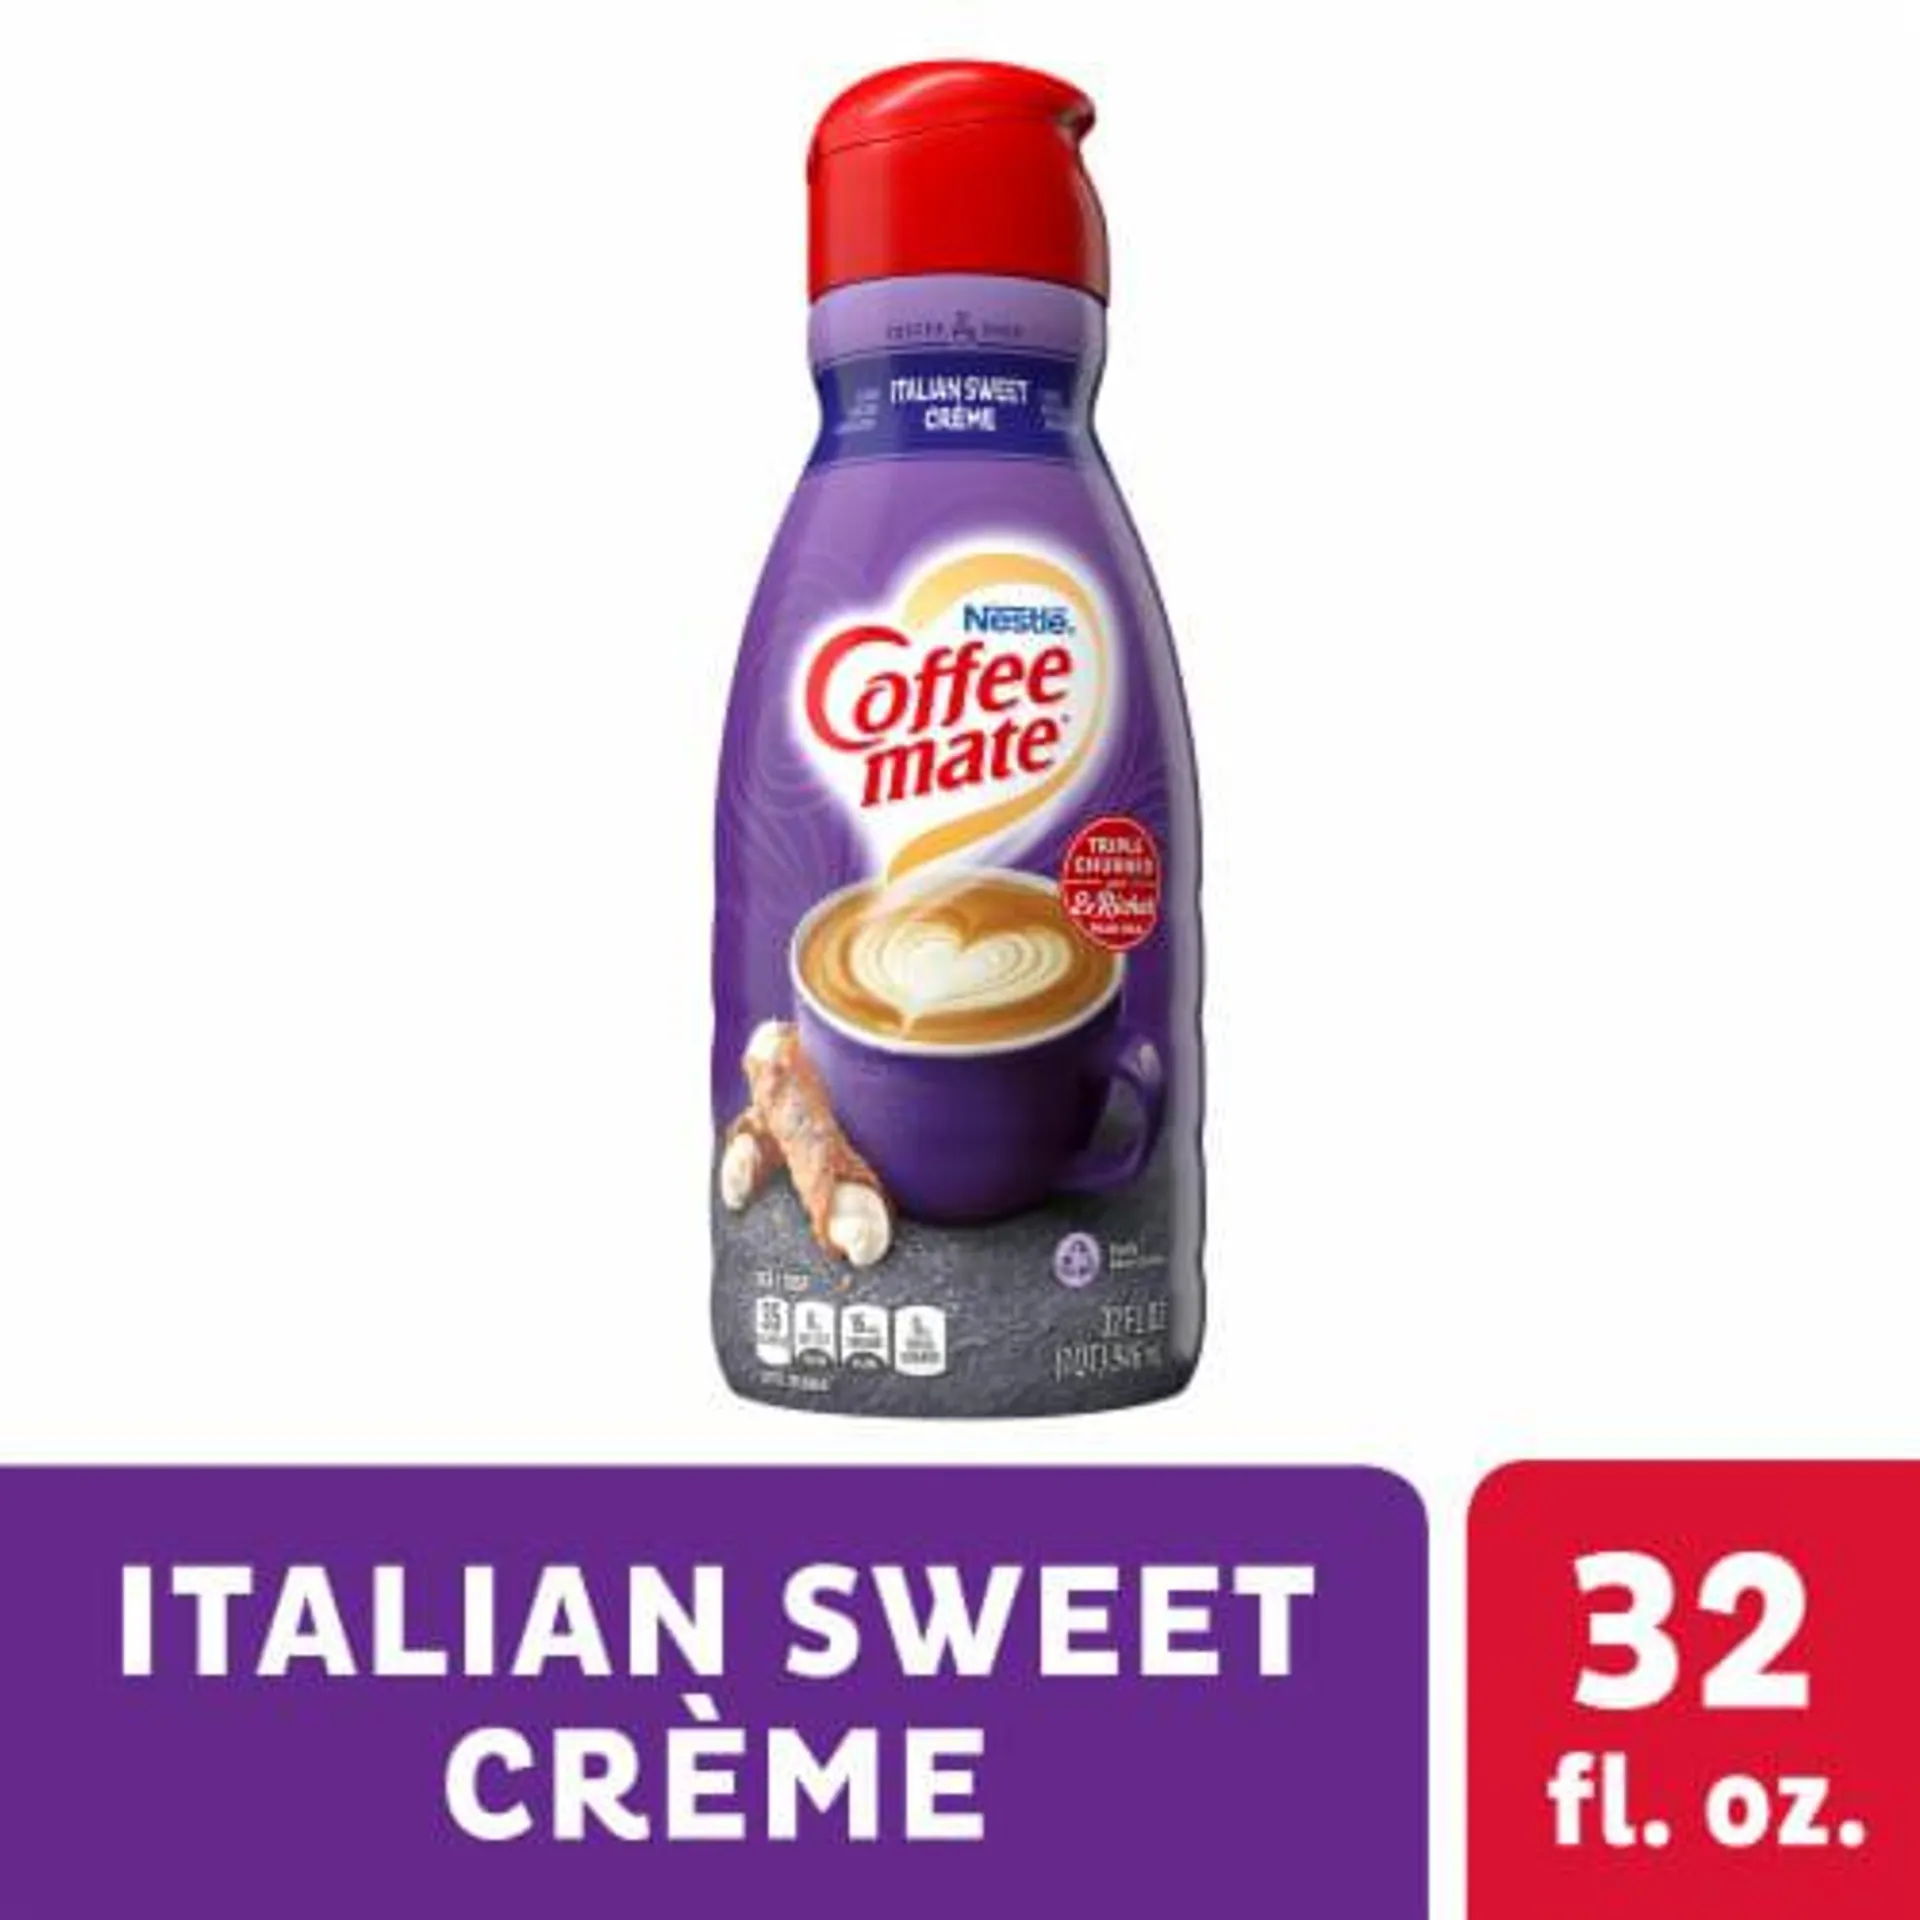 Nestle Coffee mate Italian Sweet Creme Liquid Coffee Creamer